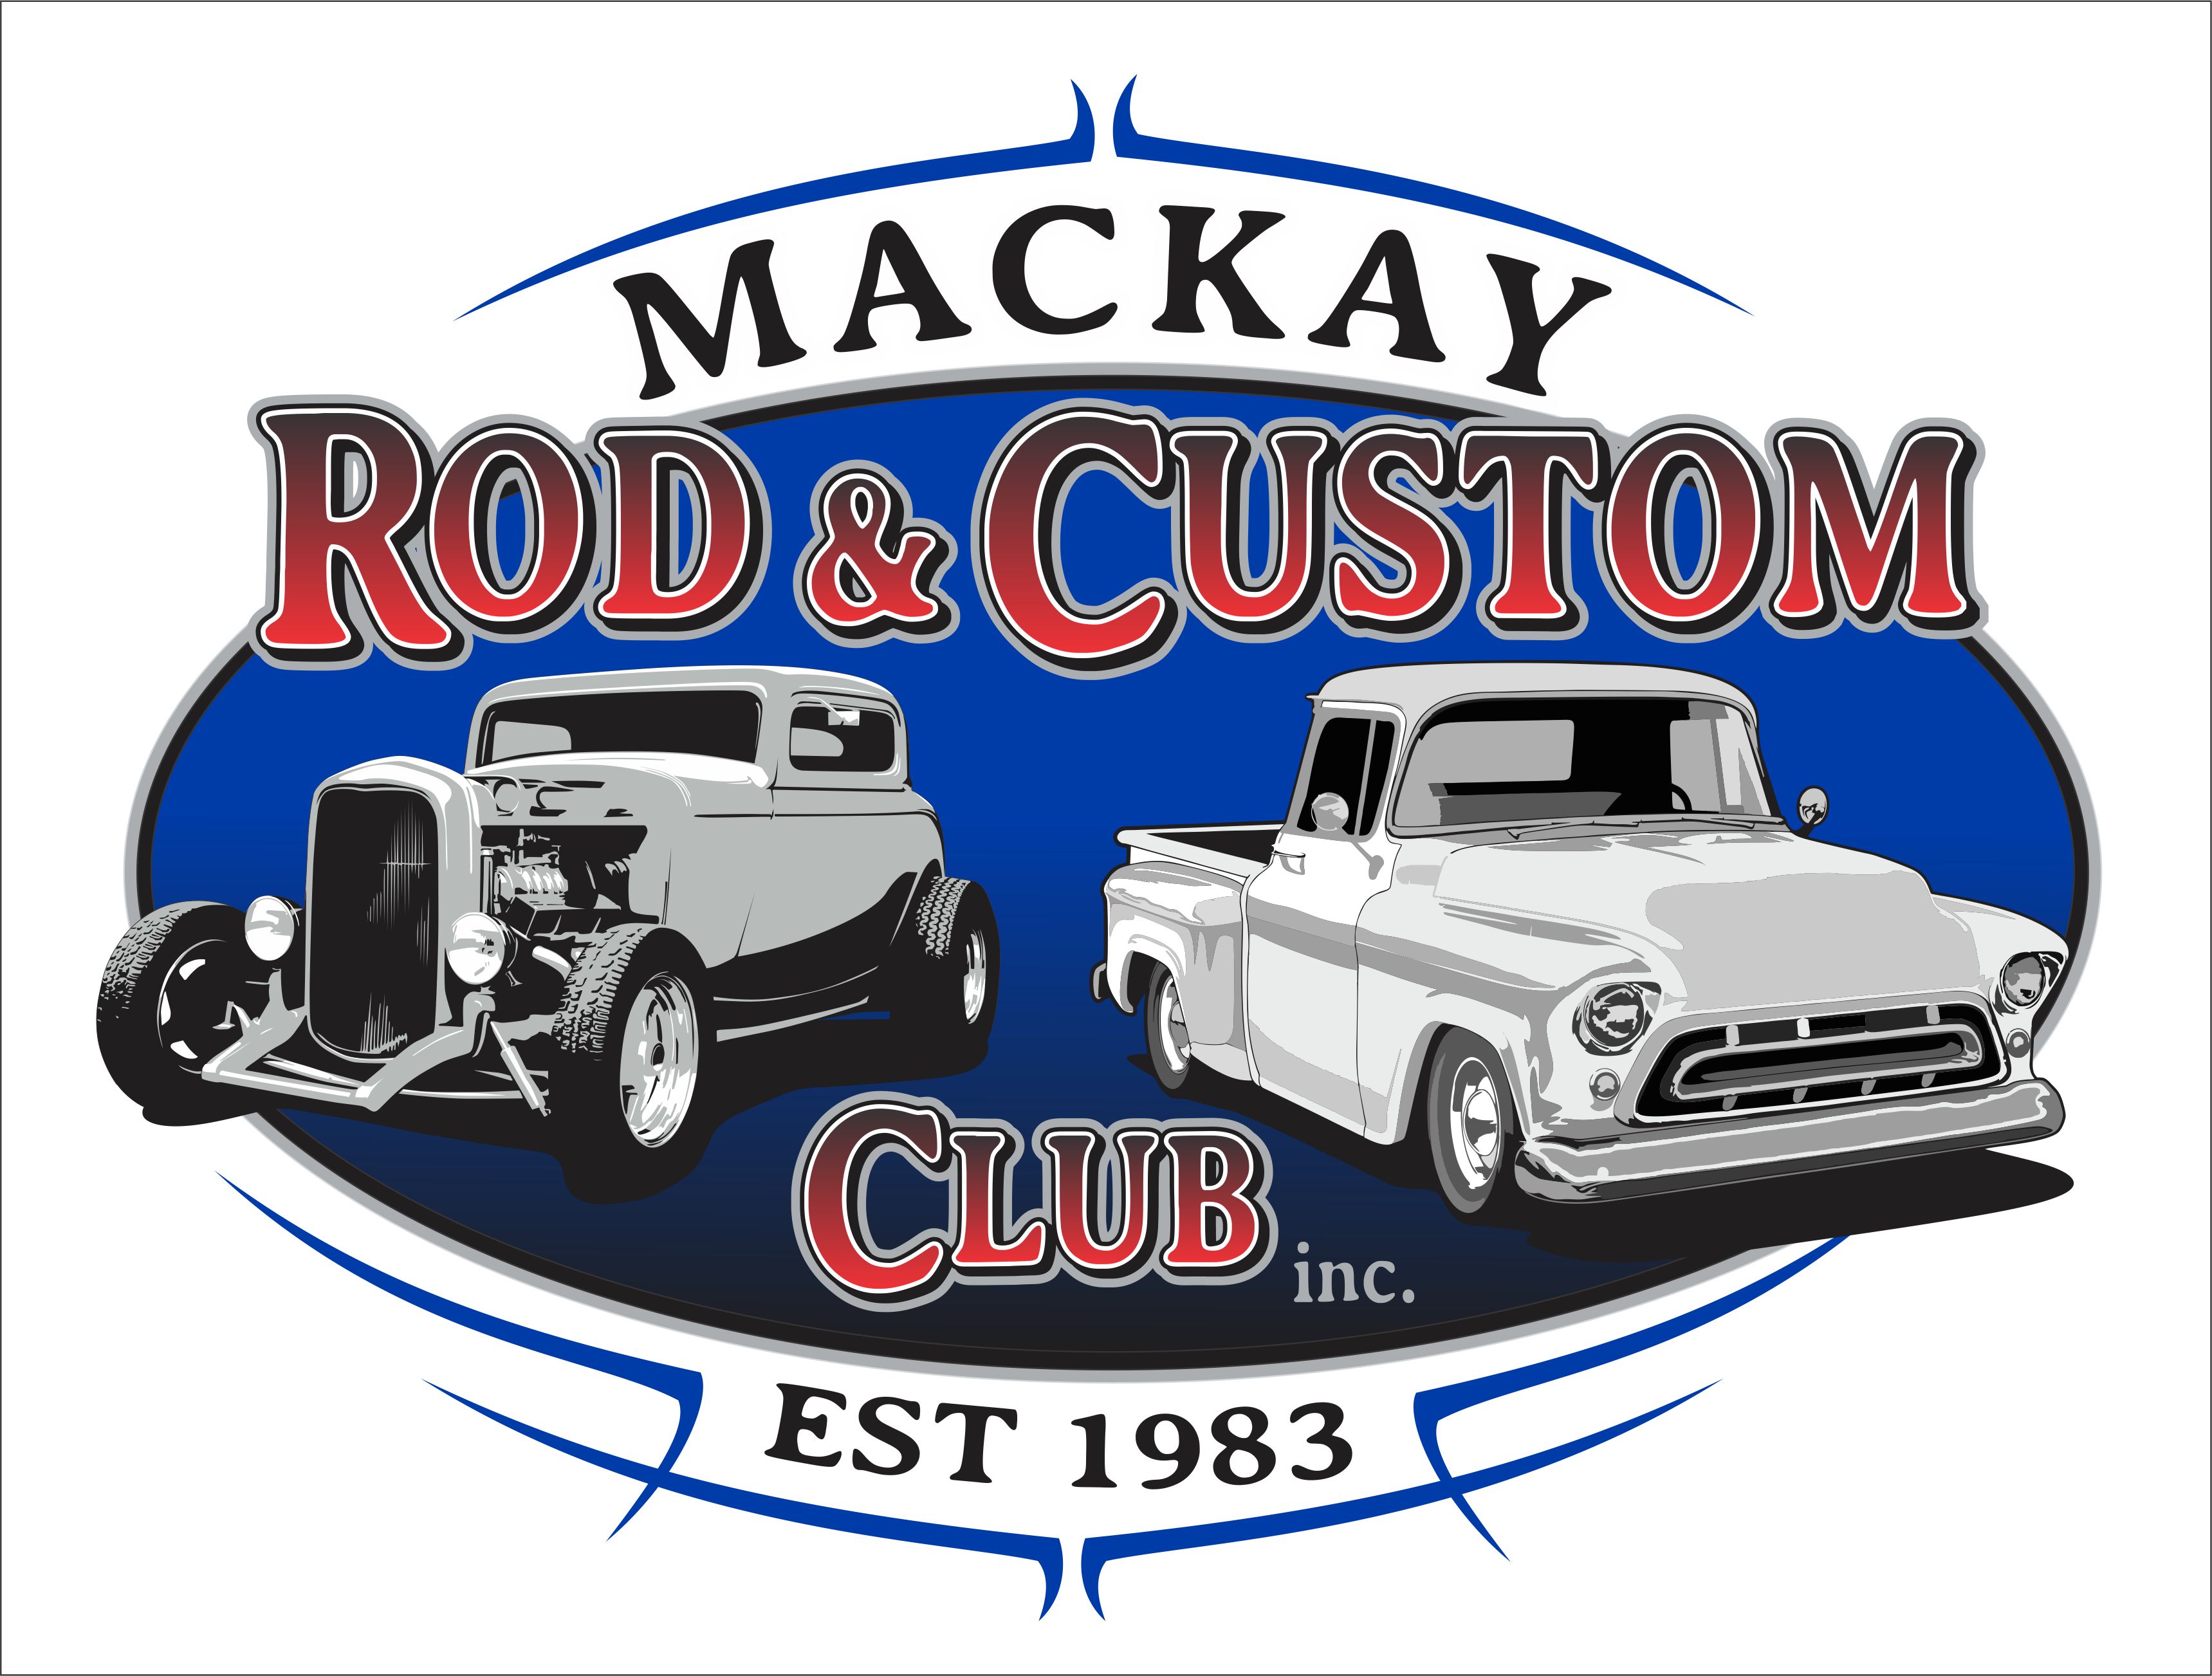 Mackay Rod & Custom Club